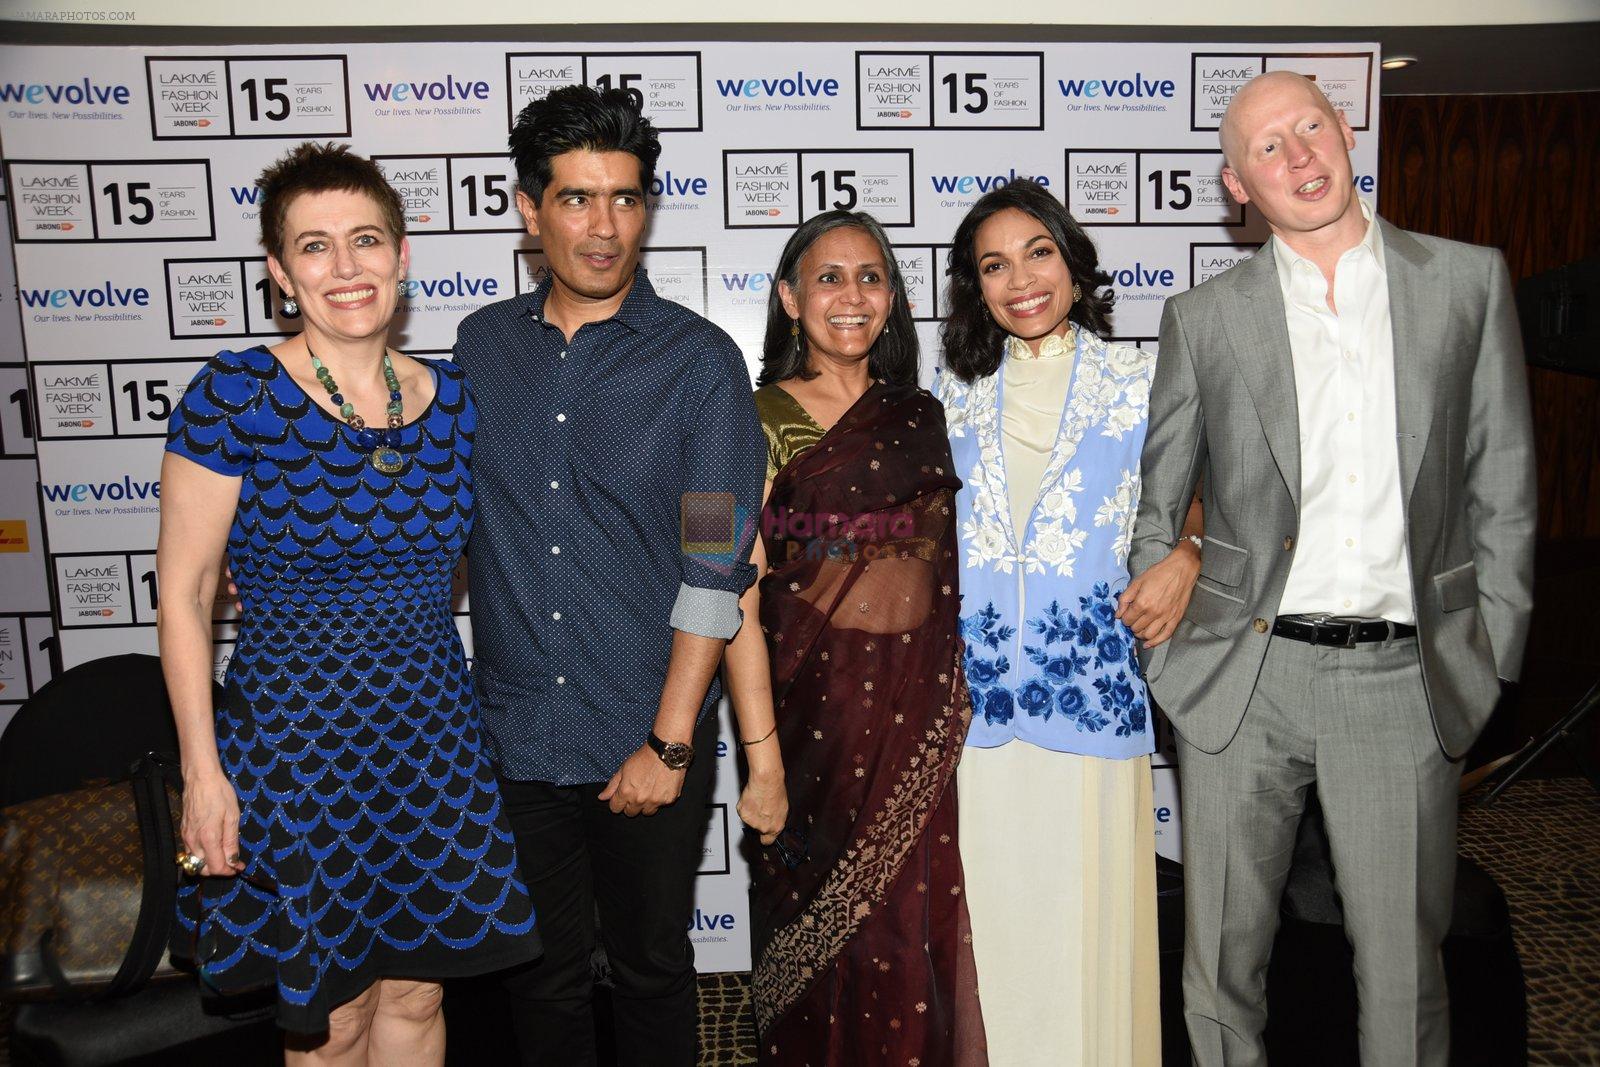 Rosario Dawson and Manish Malhotra at Wevolve media meet in Mumbai on 18th March 2015